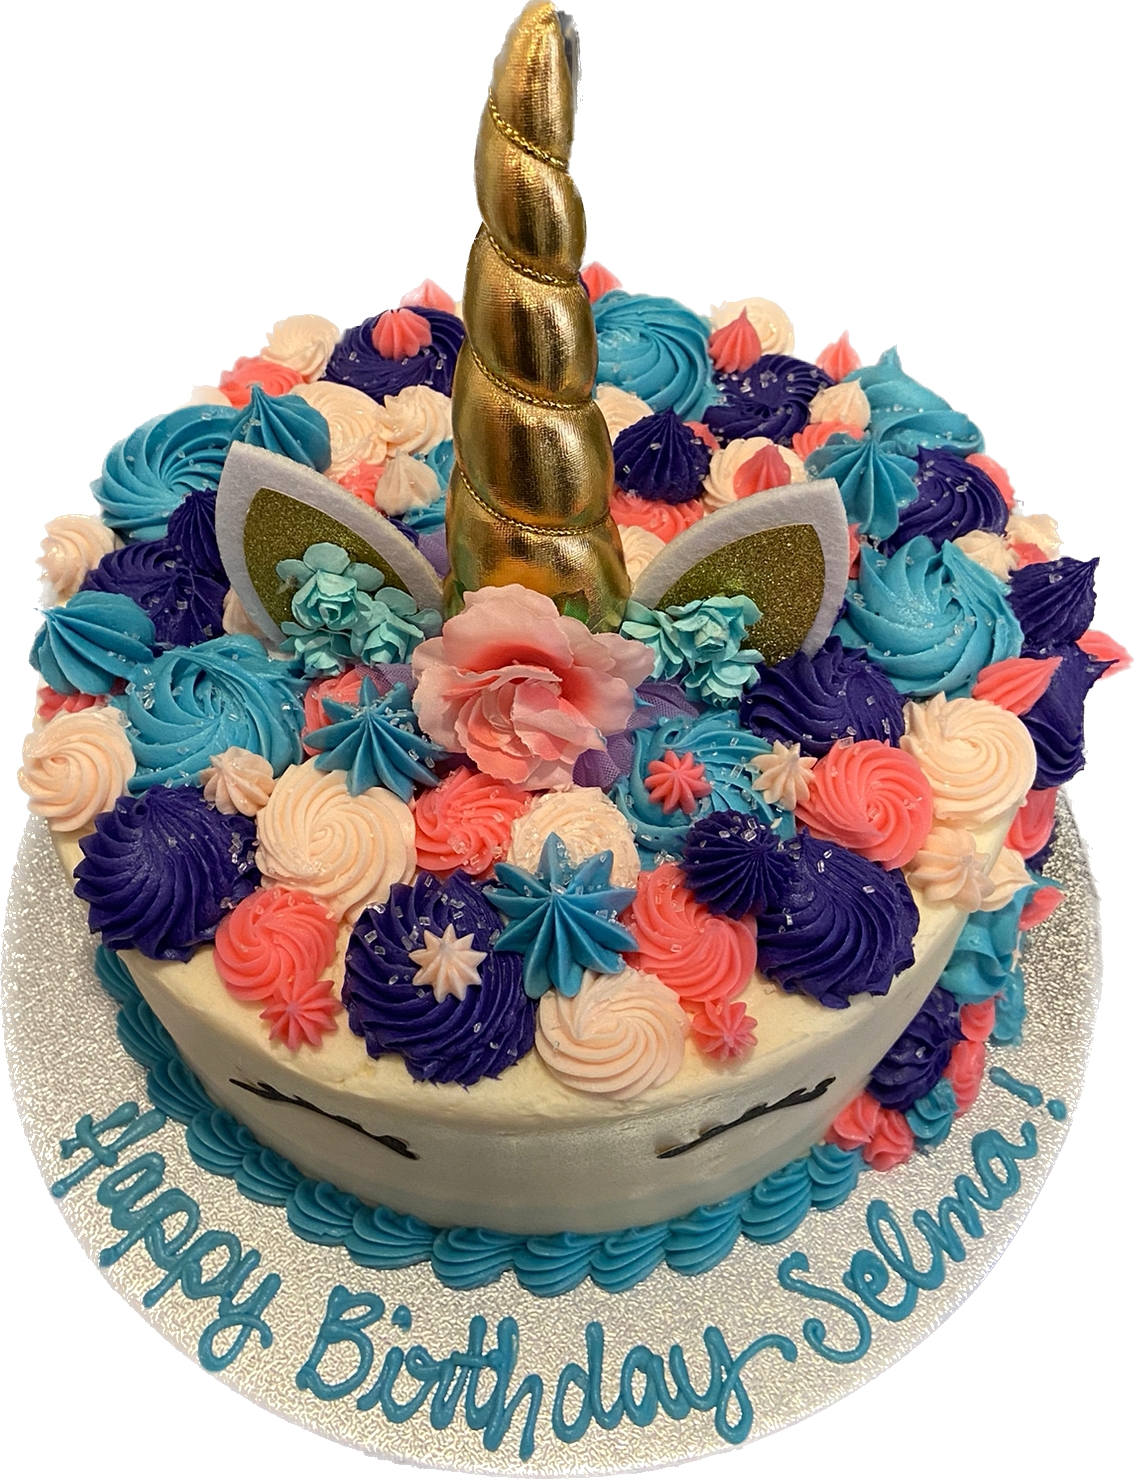 Our Unicorn girls birthday cake design! - Elite Cake Designs | Facebook